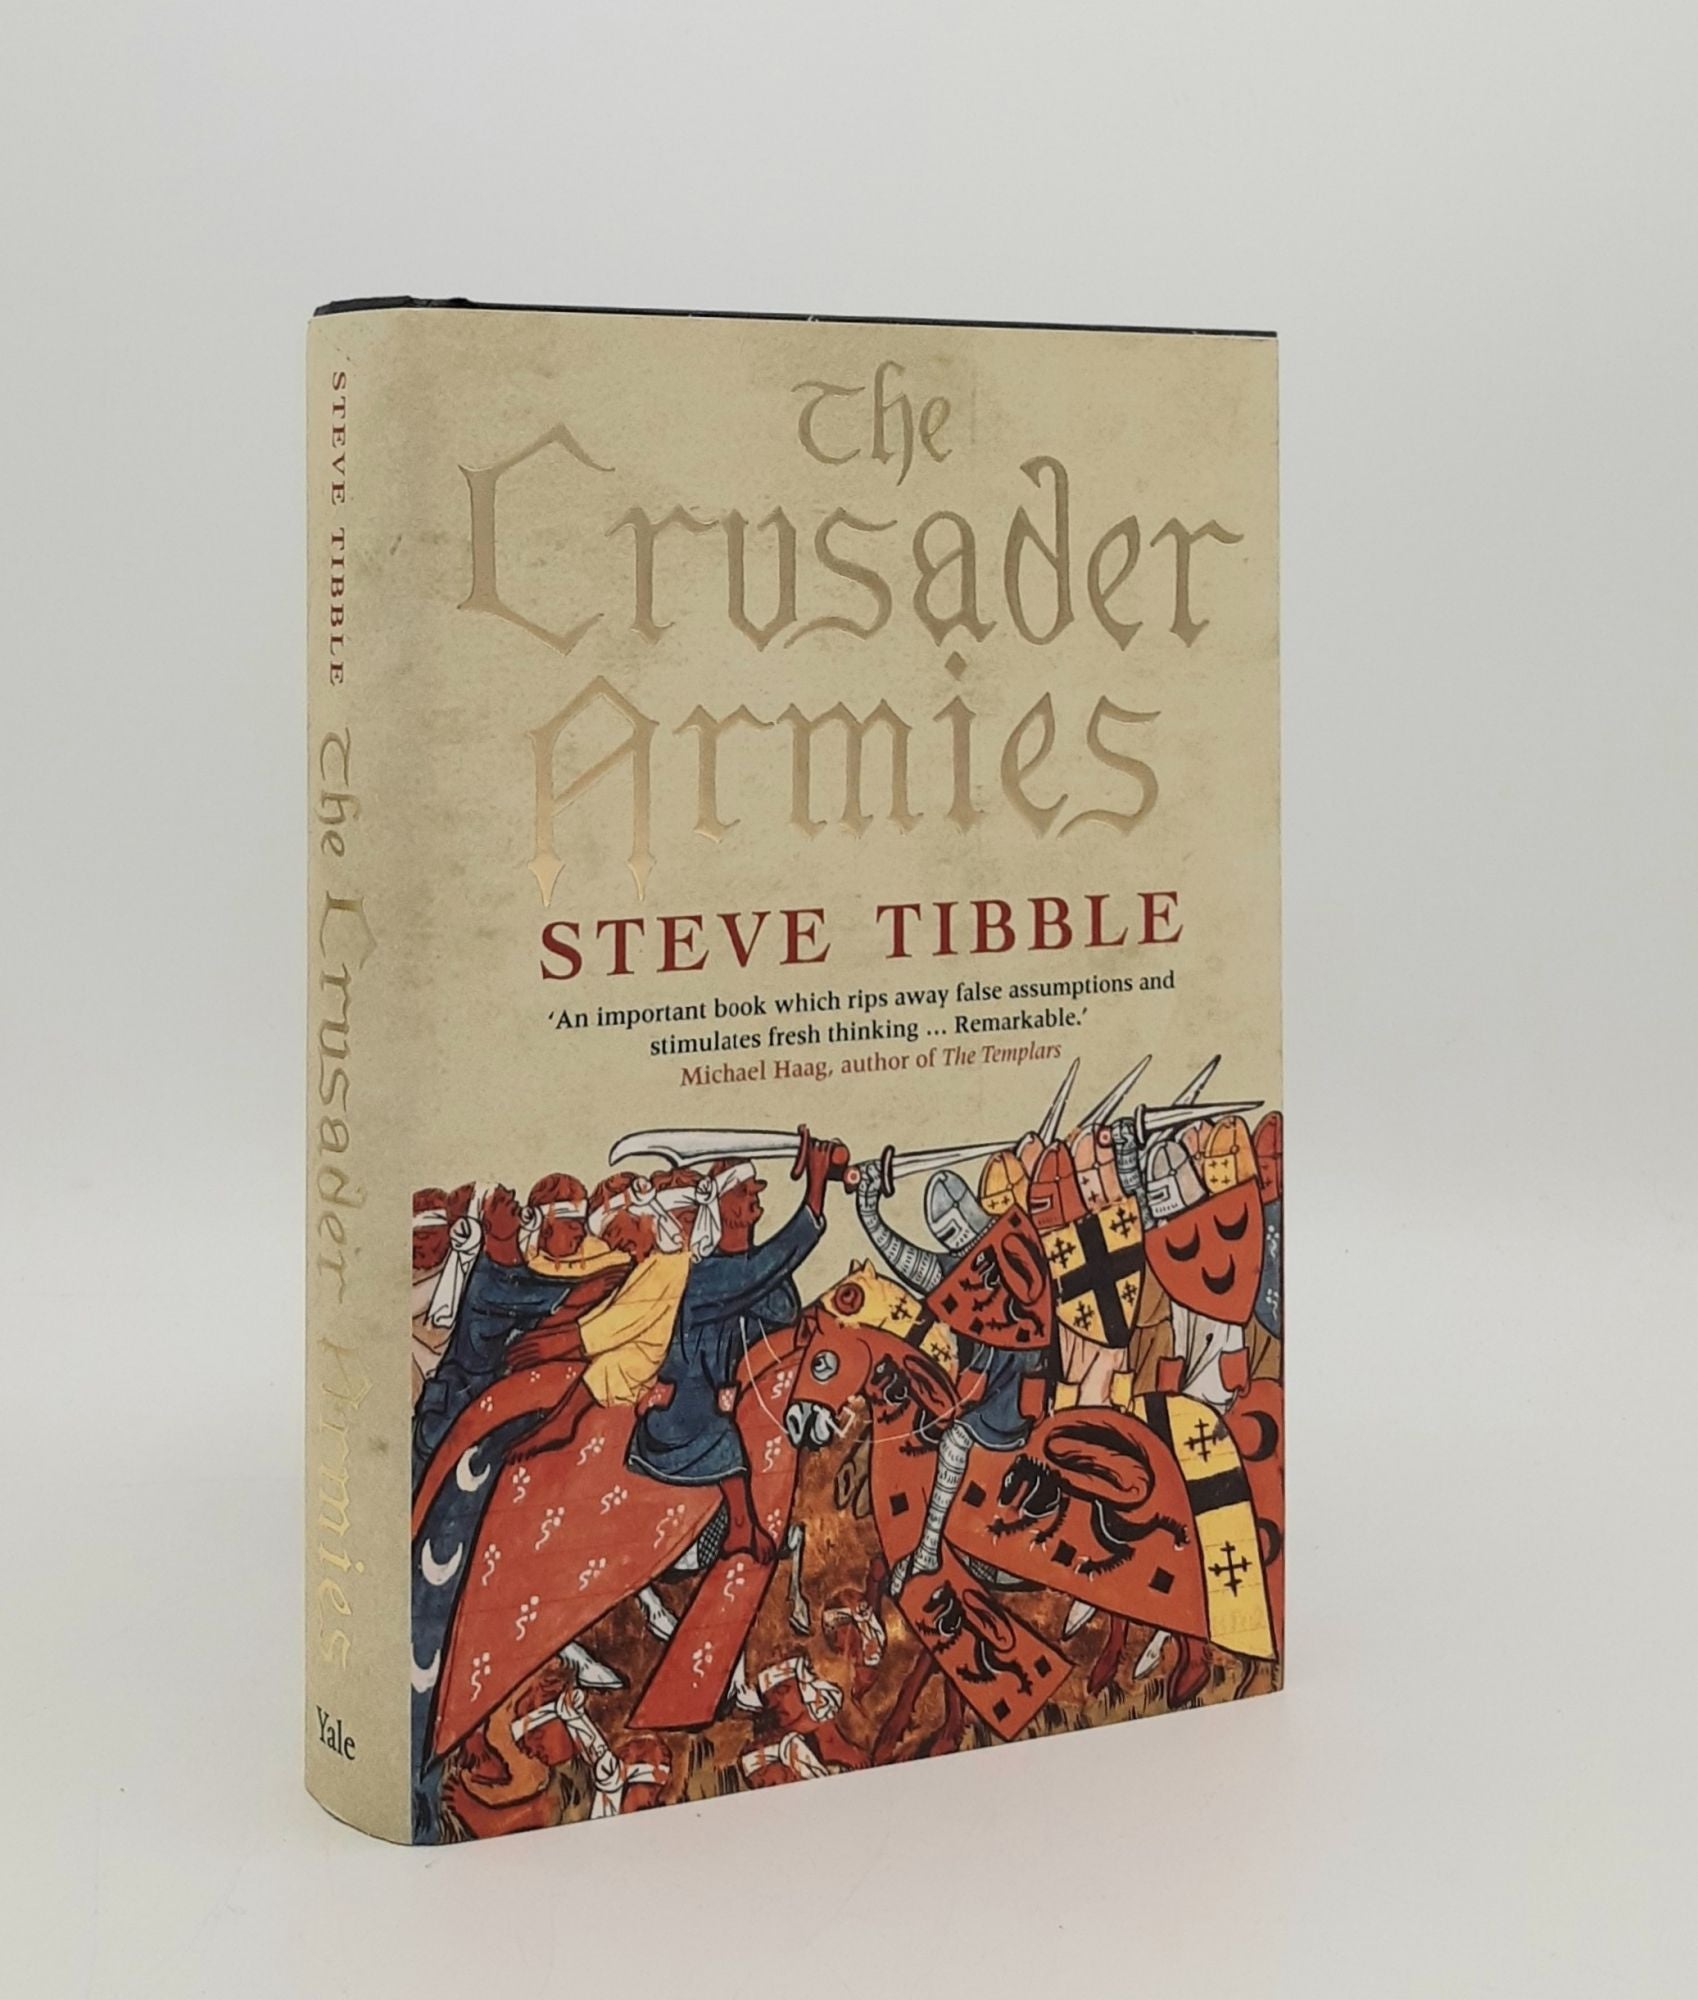 TIBBLE Steve - The Crusader Armies